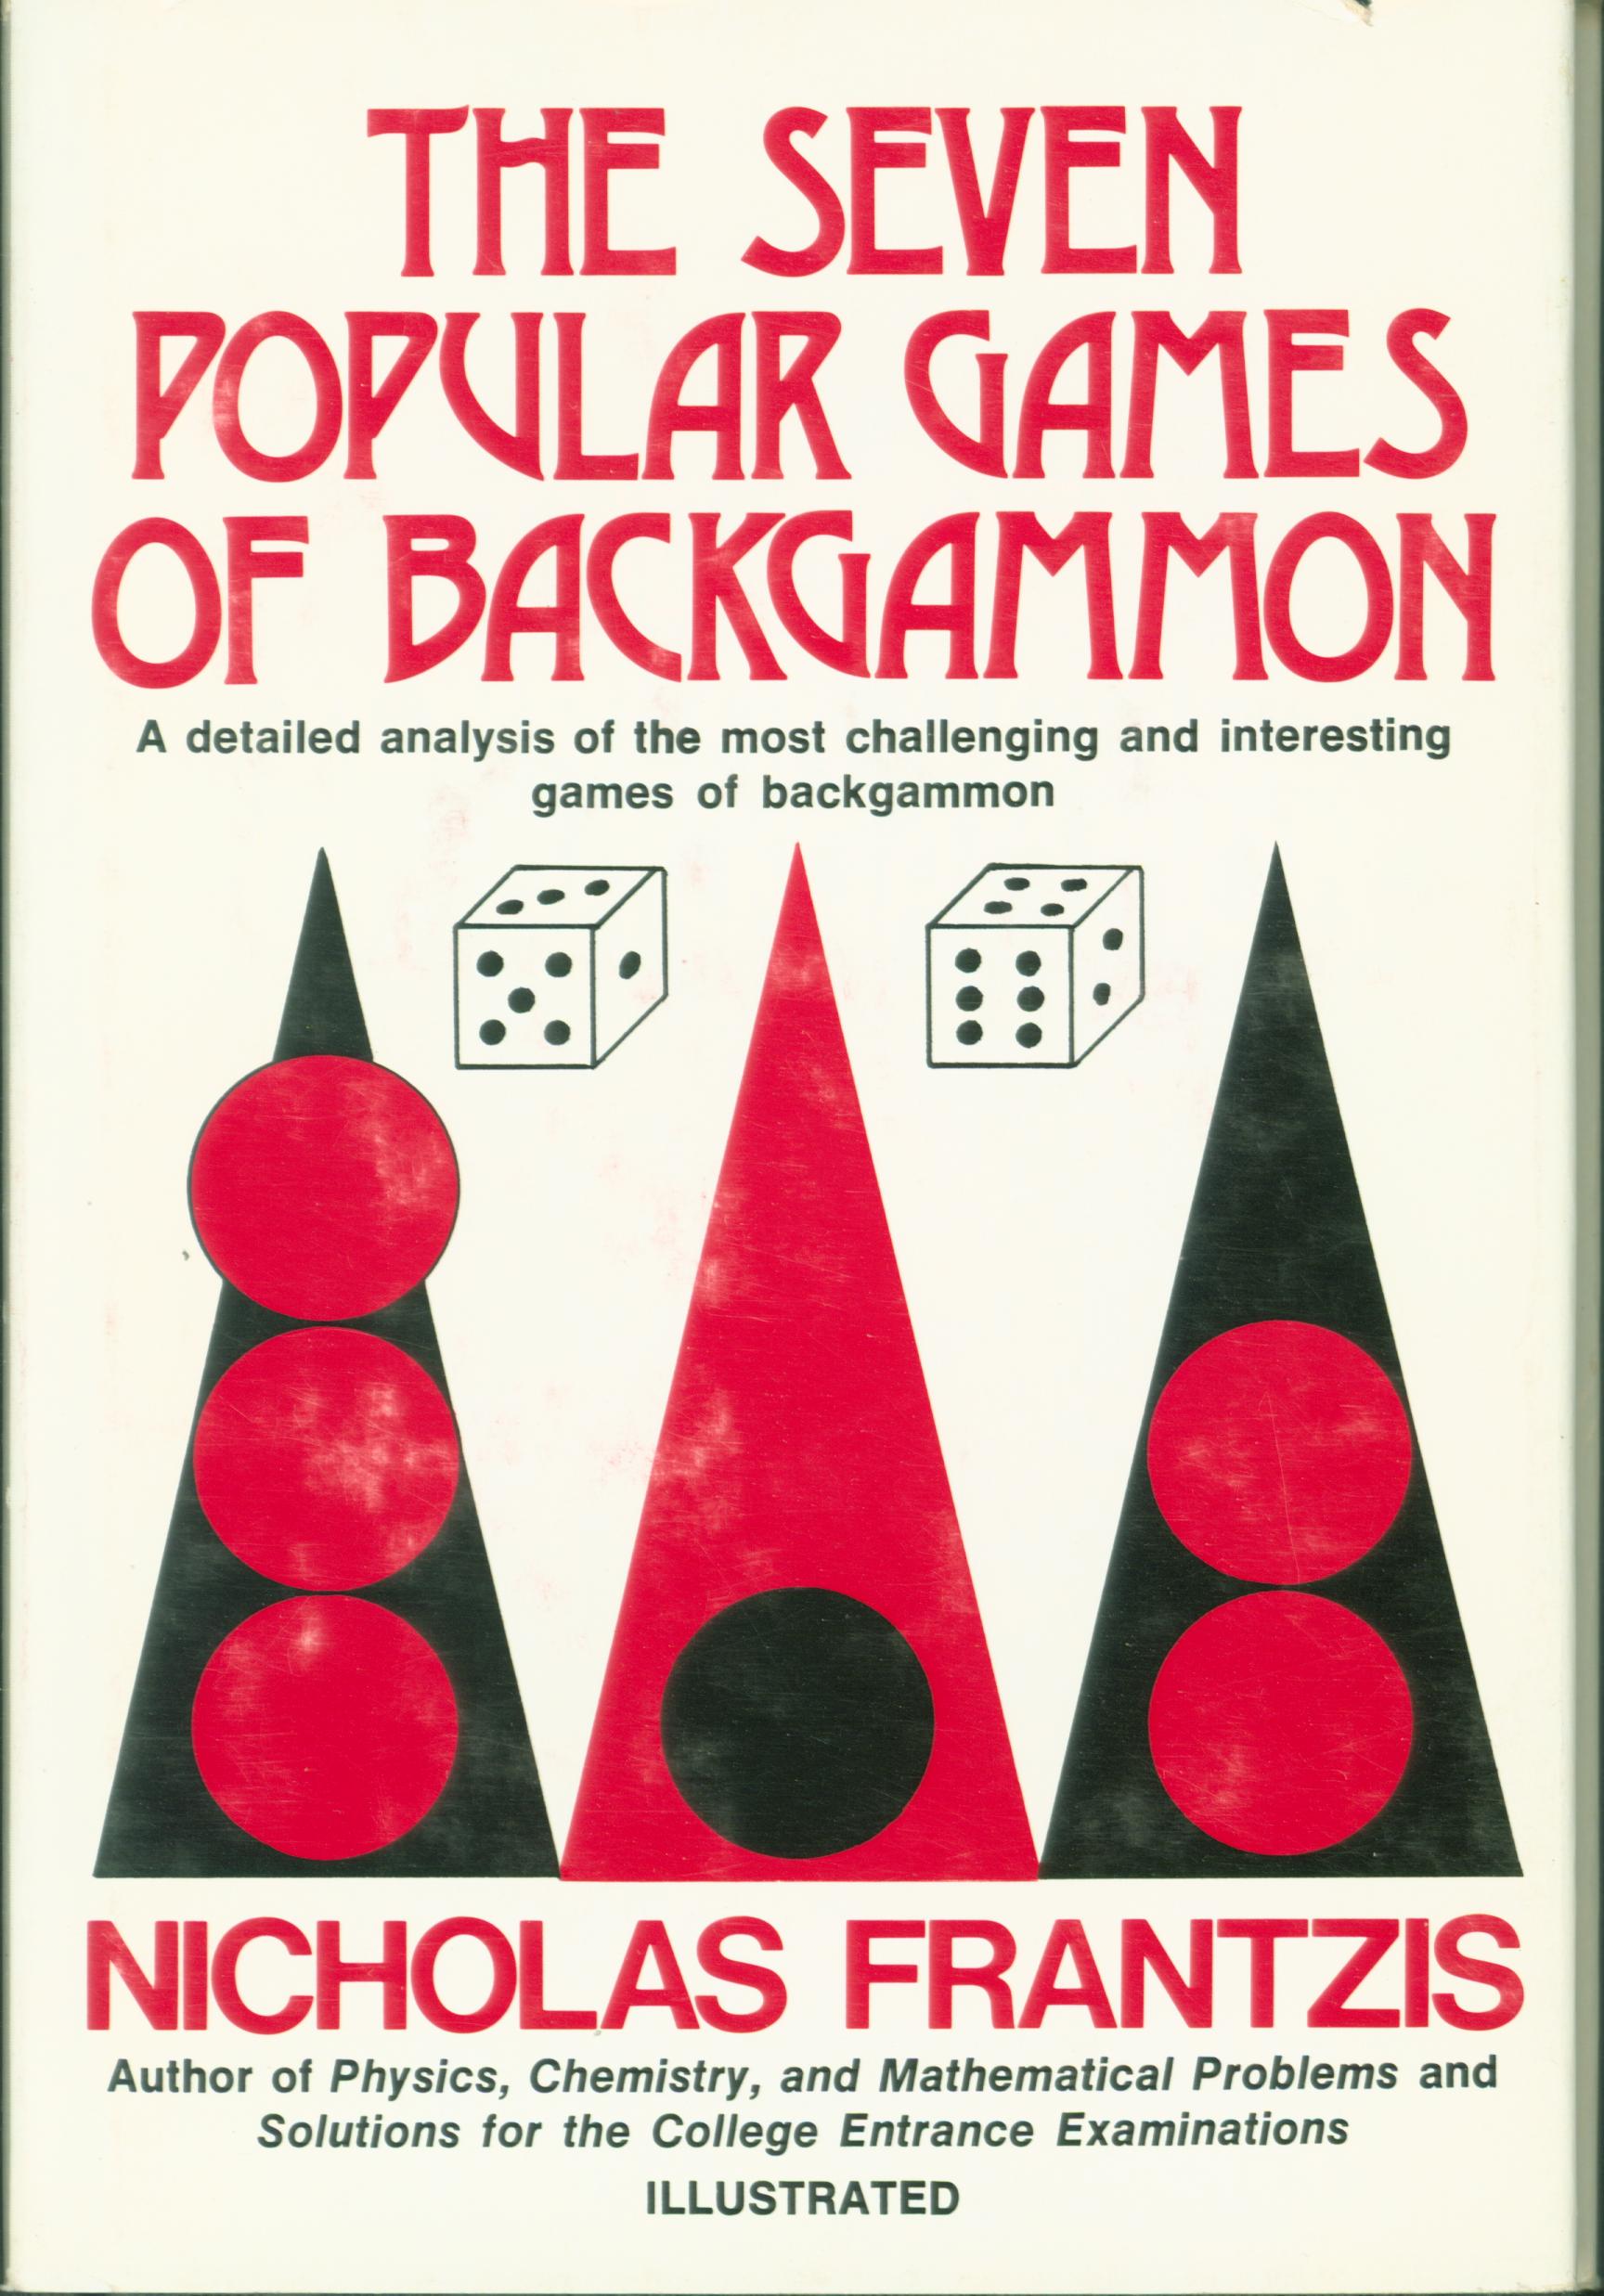 THE SEVEN POPULAR GAMES OF BACKGAMMON. 